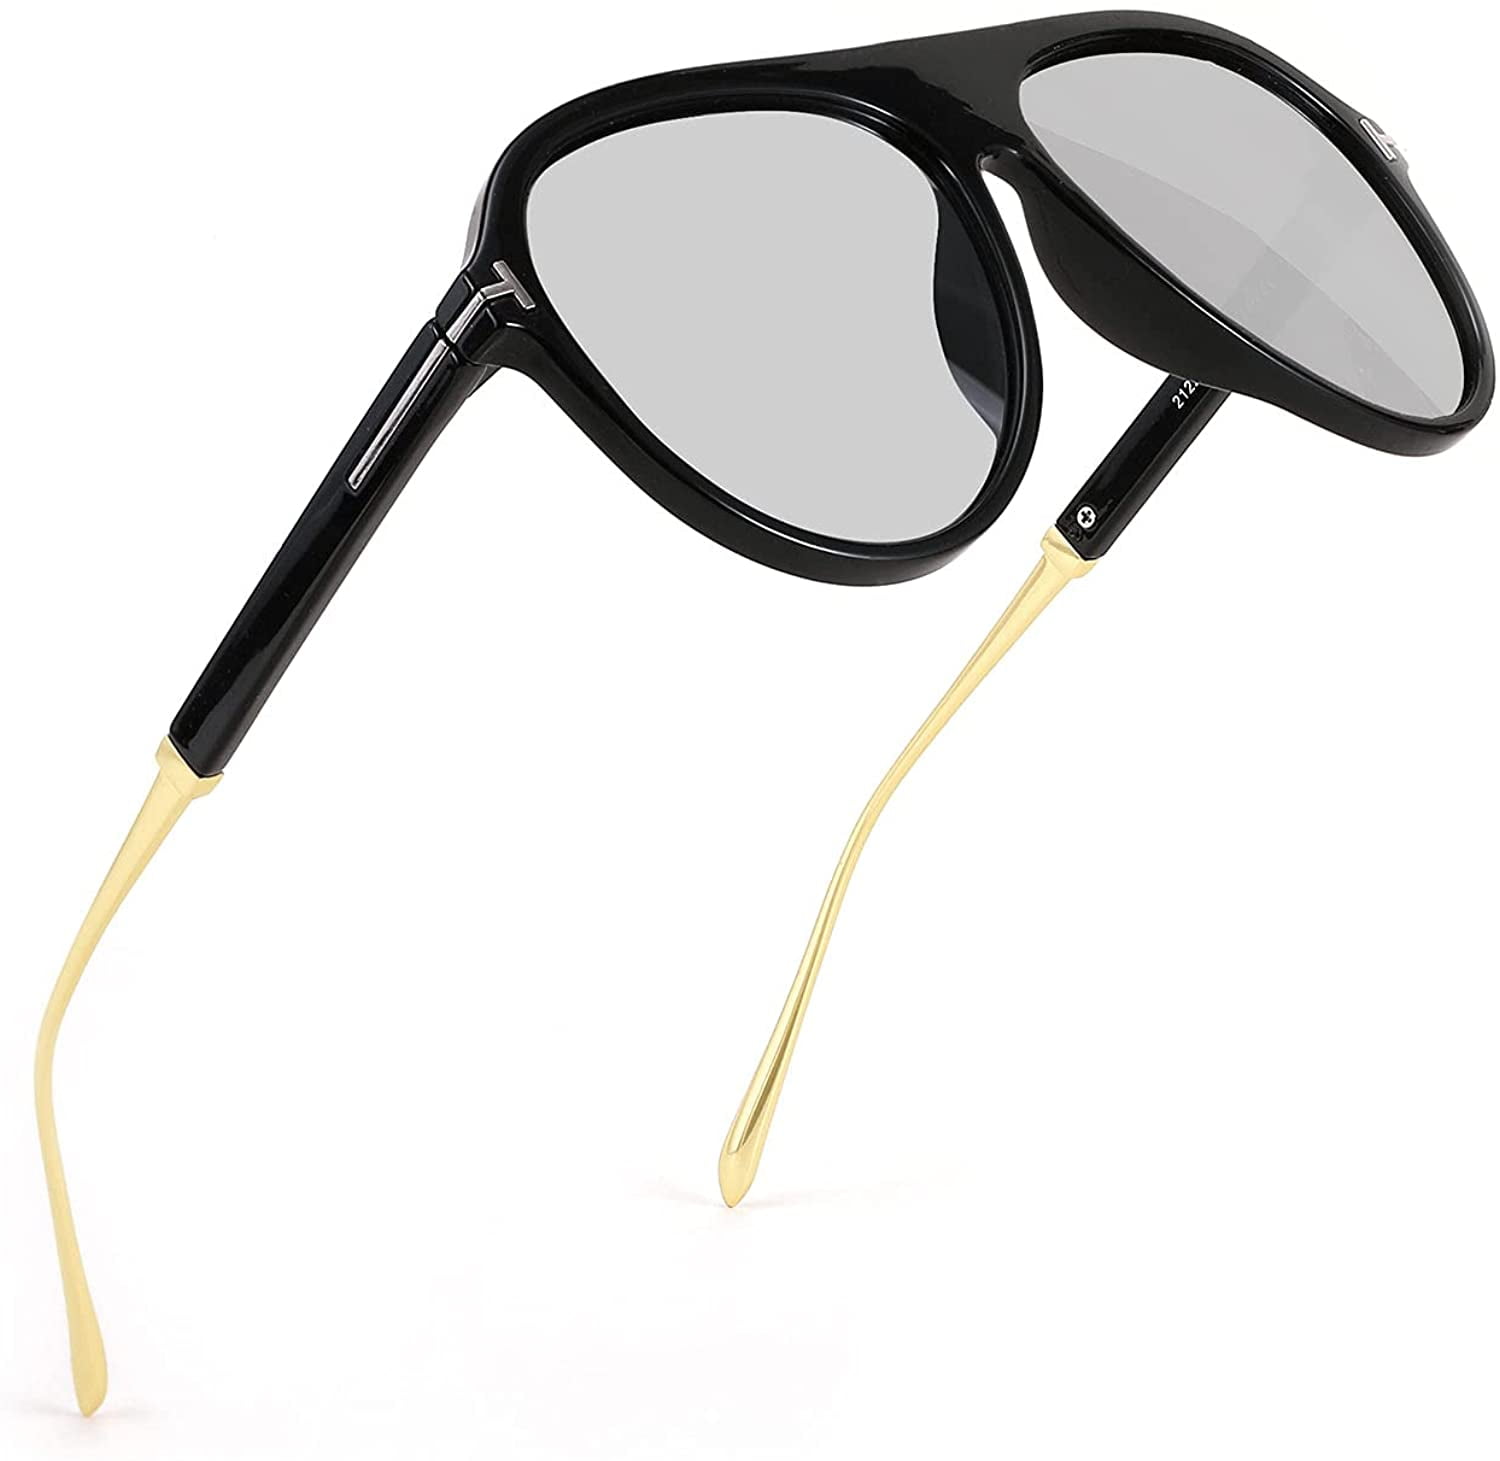 Feisedy Retro 70s Aviator Sunglasses Oversized Classic Fantastically Vintage Round Sun Glasses For Women Men B2924 Silver 57 Millimeters